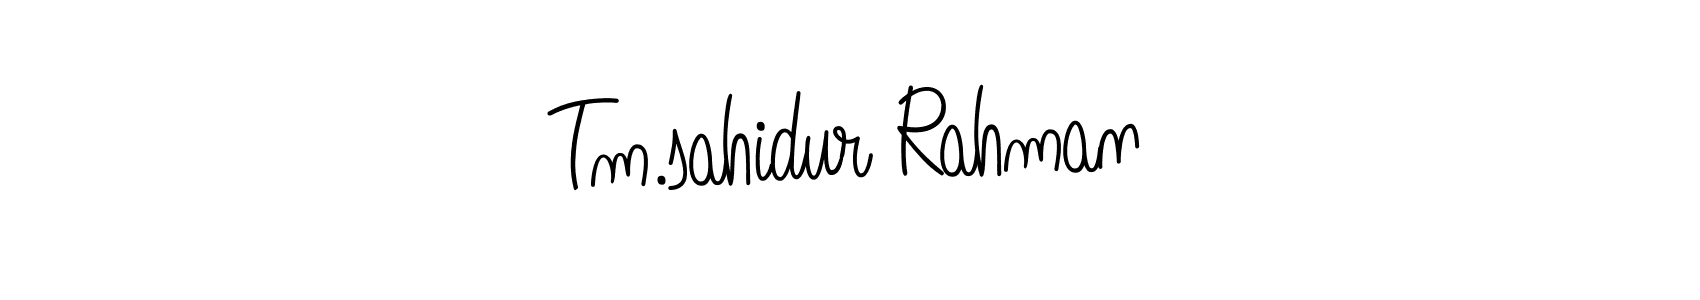 How to Draw Tm.sahidur Rahman signature style? Angelique-Rose-font-FFP is a latest design signature styles for name Tm.sahidur Rahman. Tm.sahidur Rahman signature style 5 images and pictures png